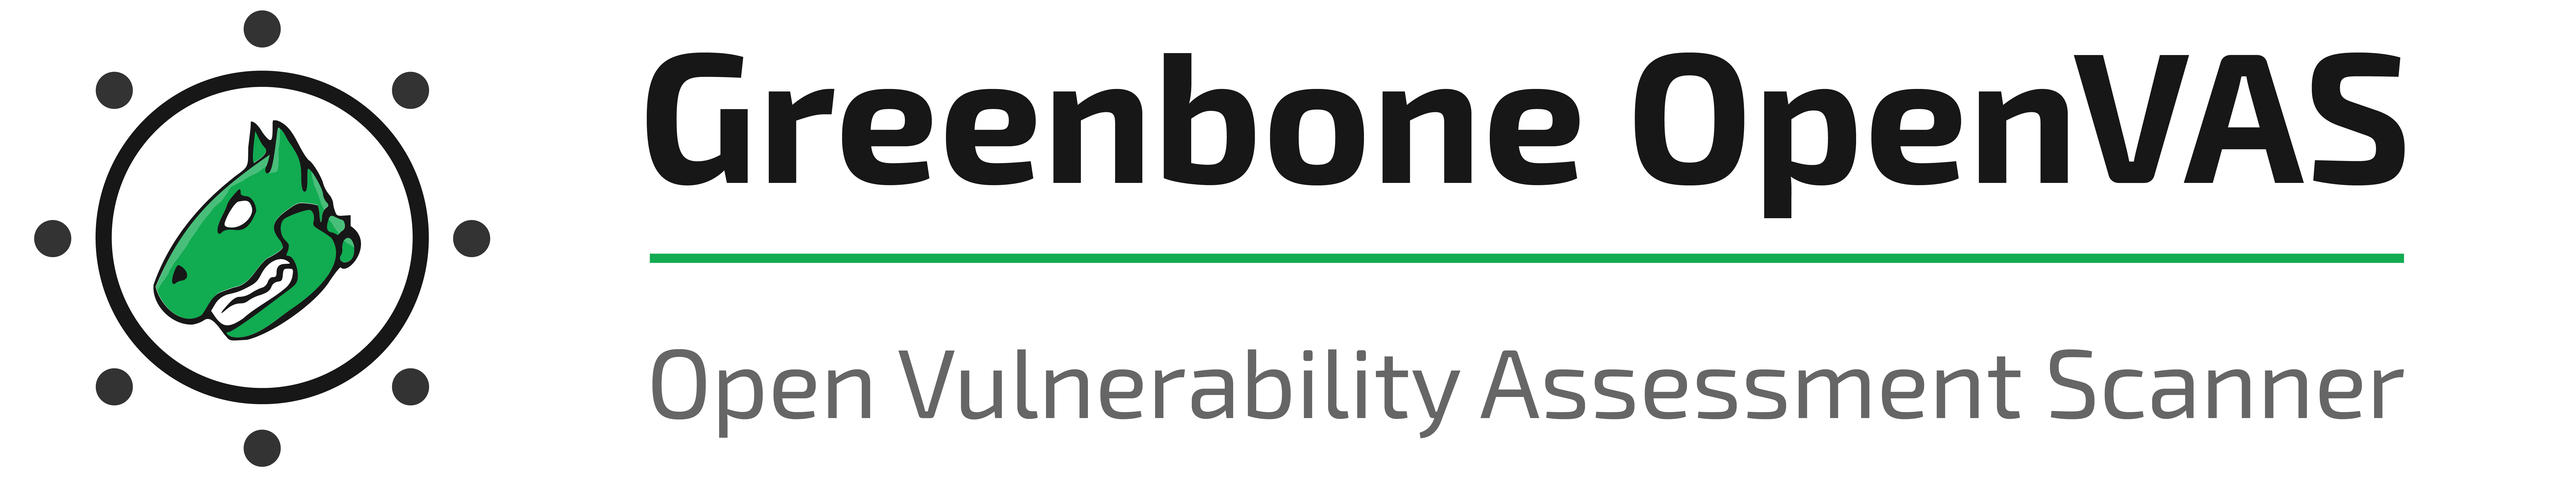 greenbone openvas logo